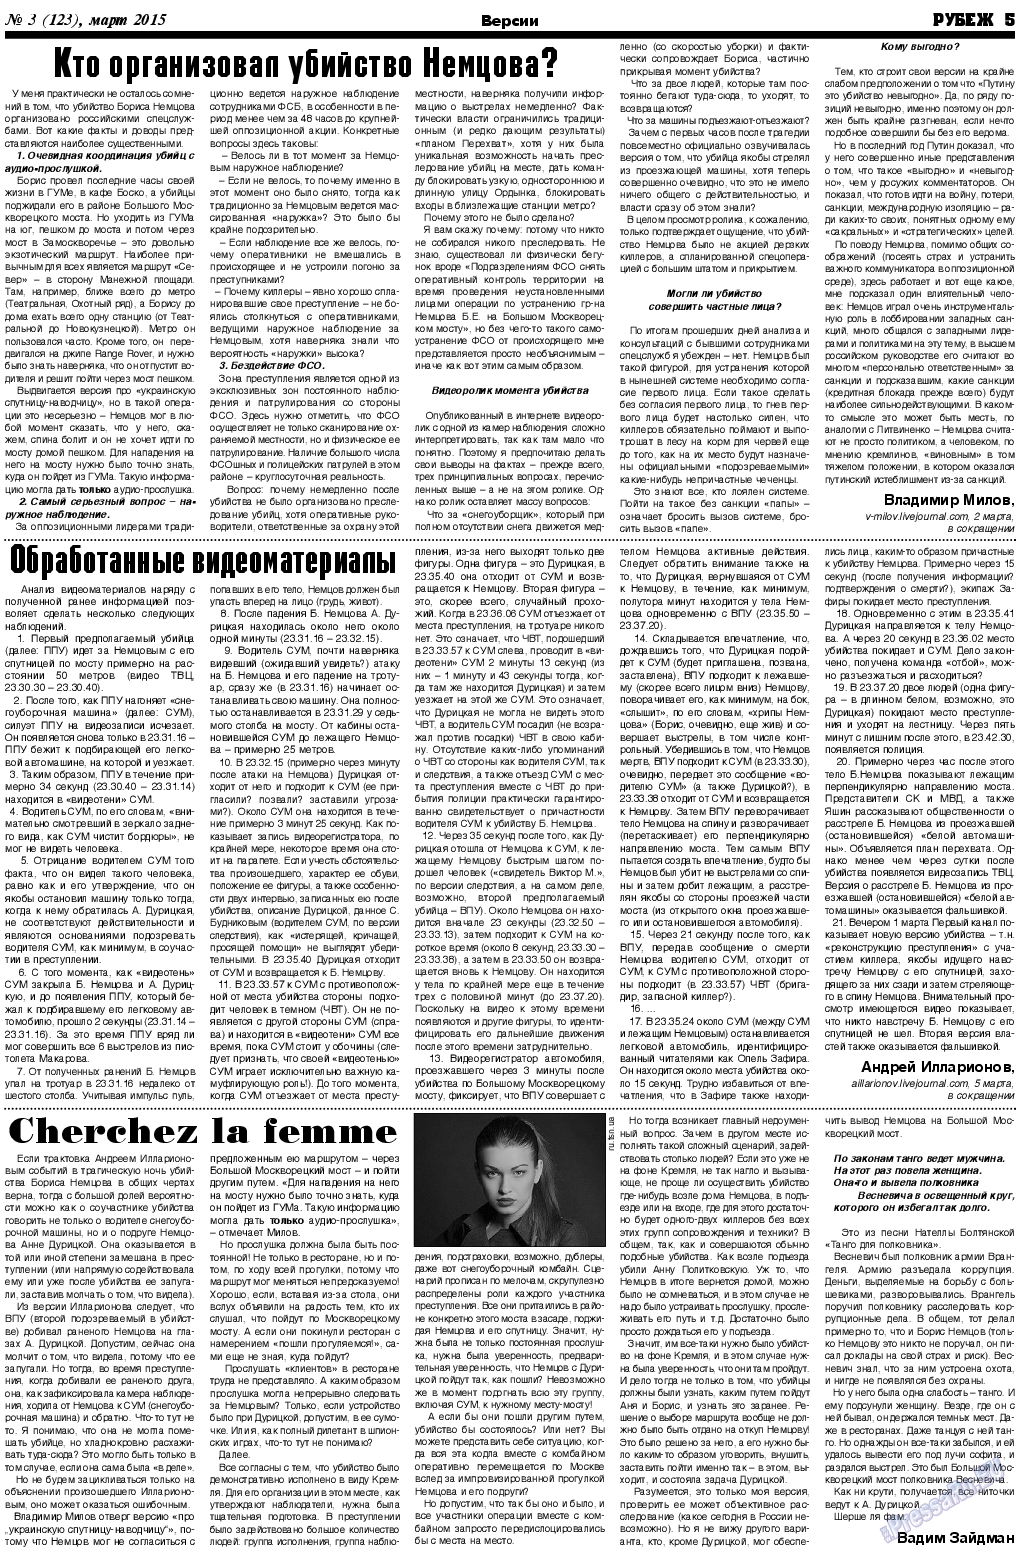 Рубеж, газета. 2015 №3 стр.5